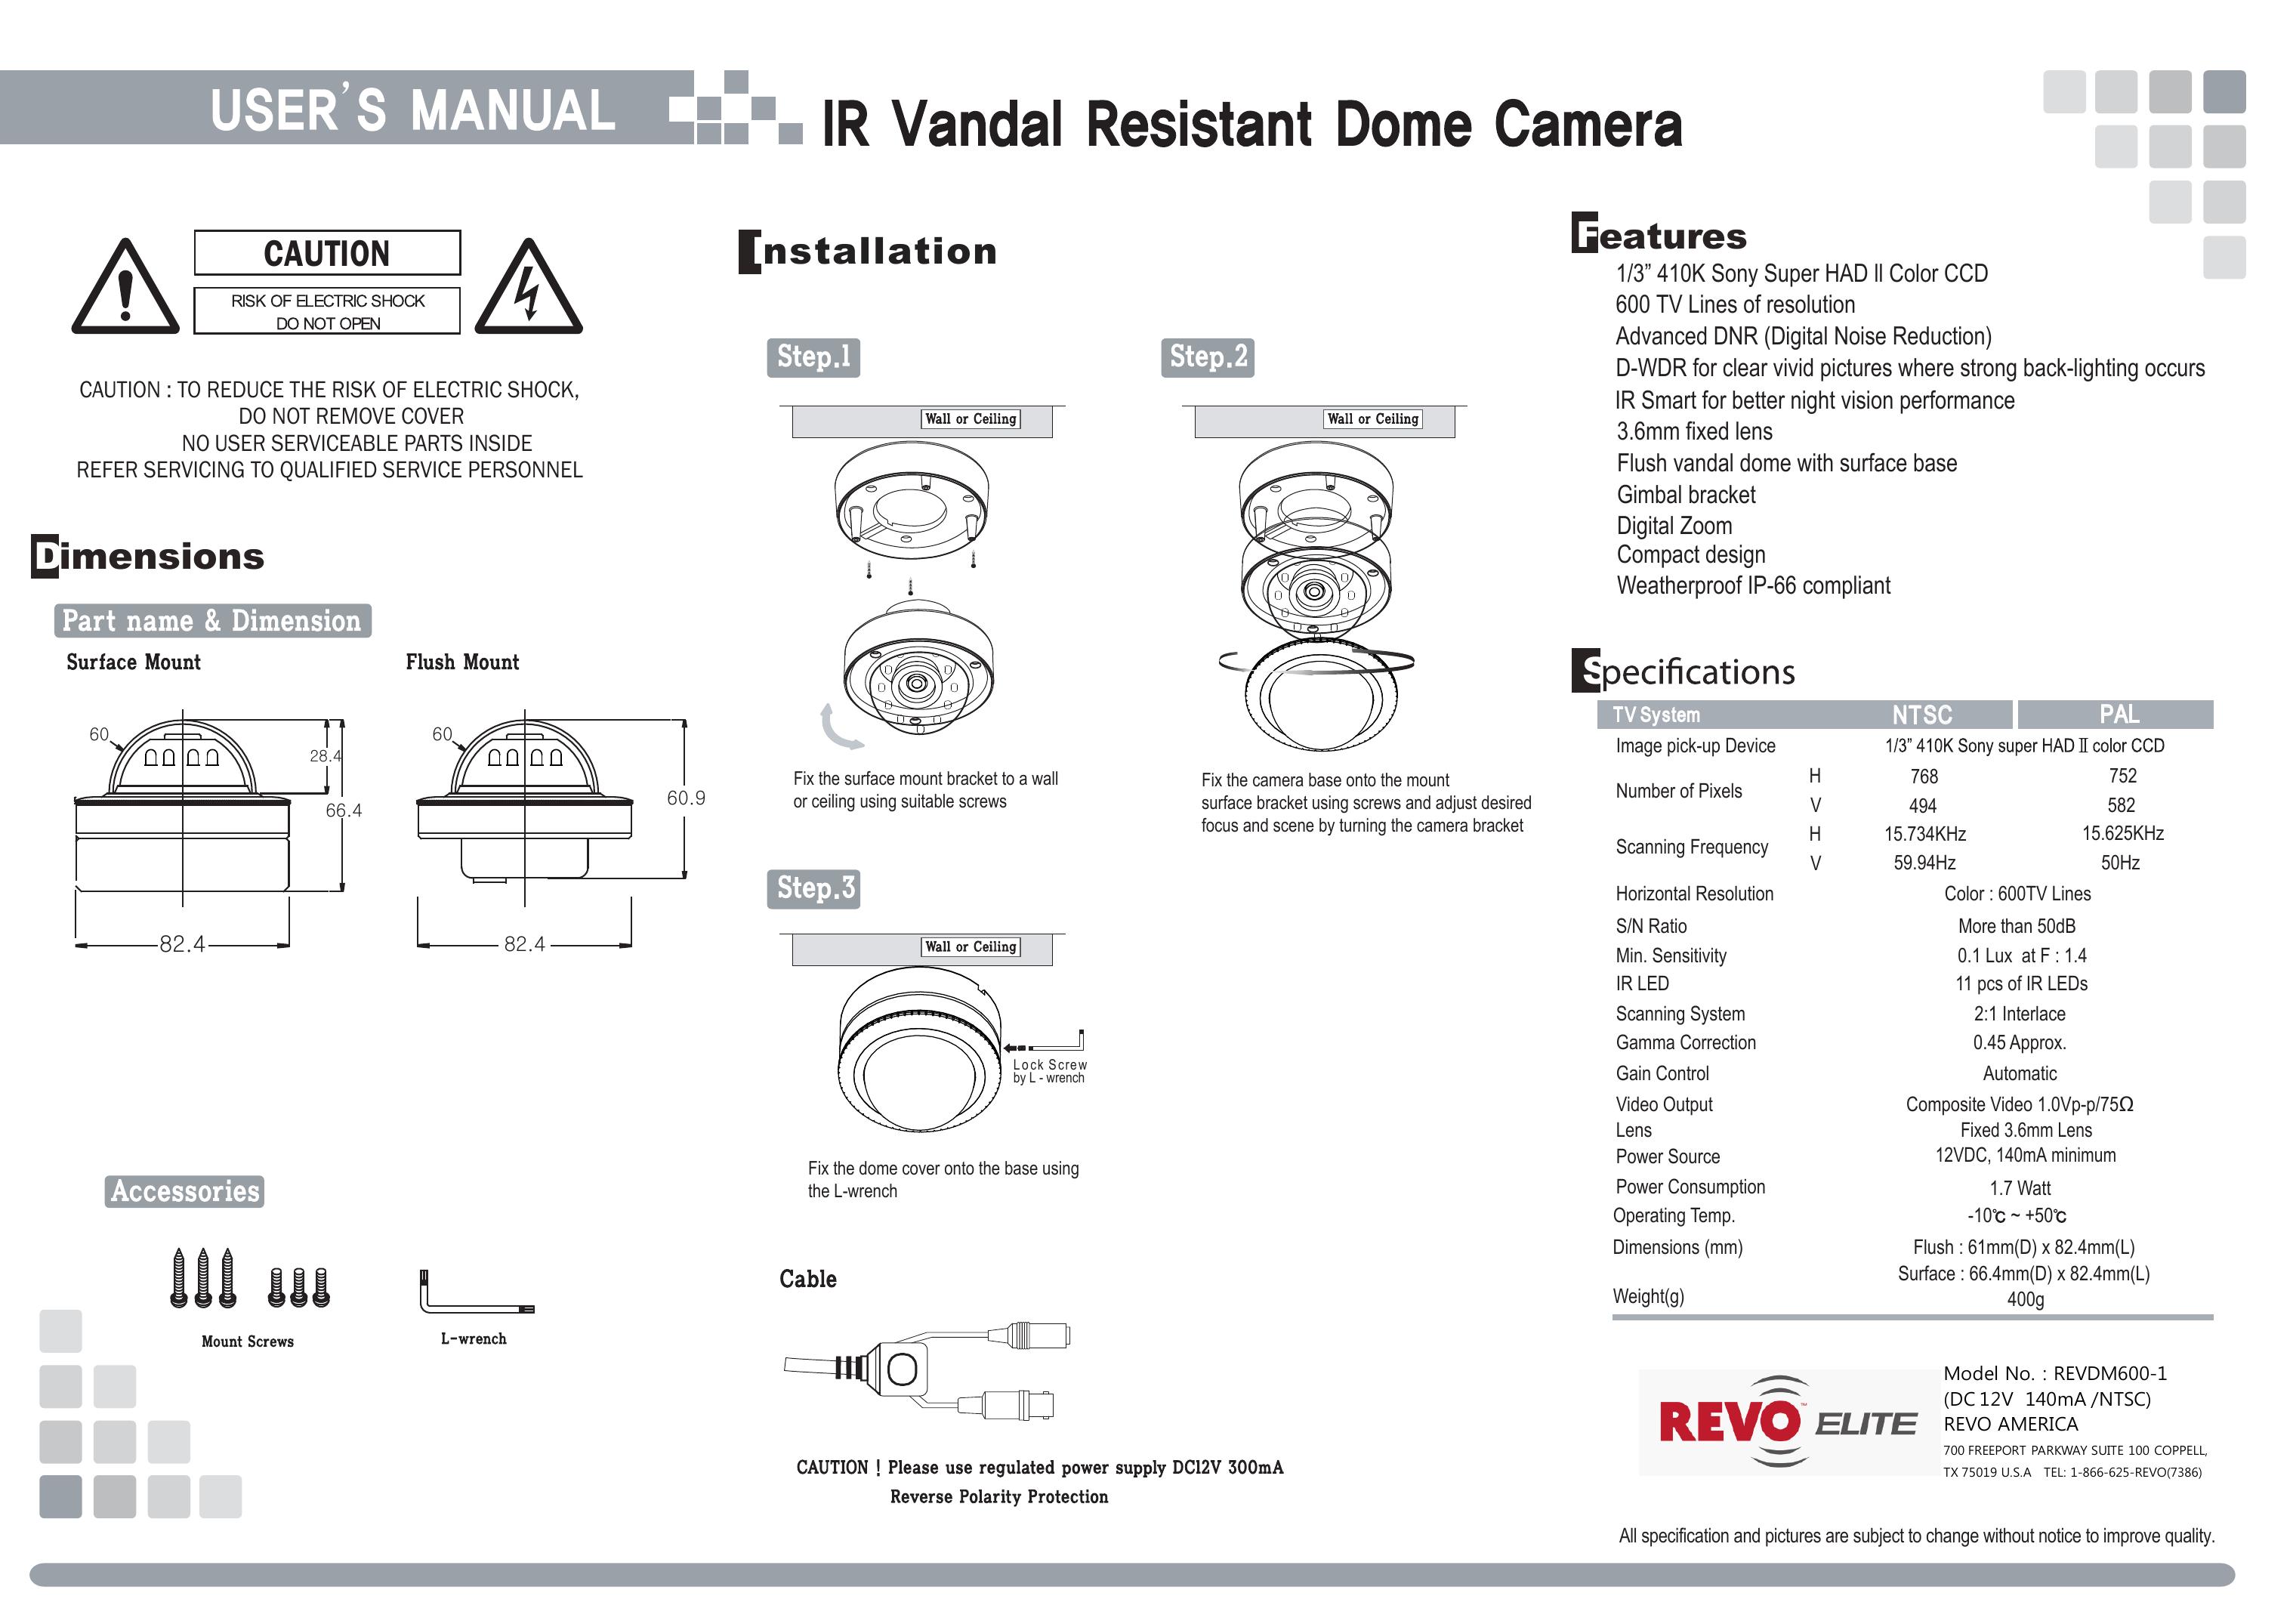 Sony REVDM600-1 Security Camera User Manual